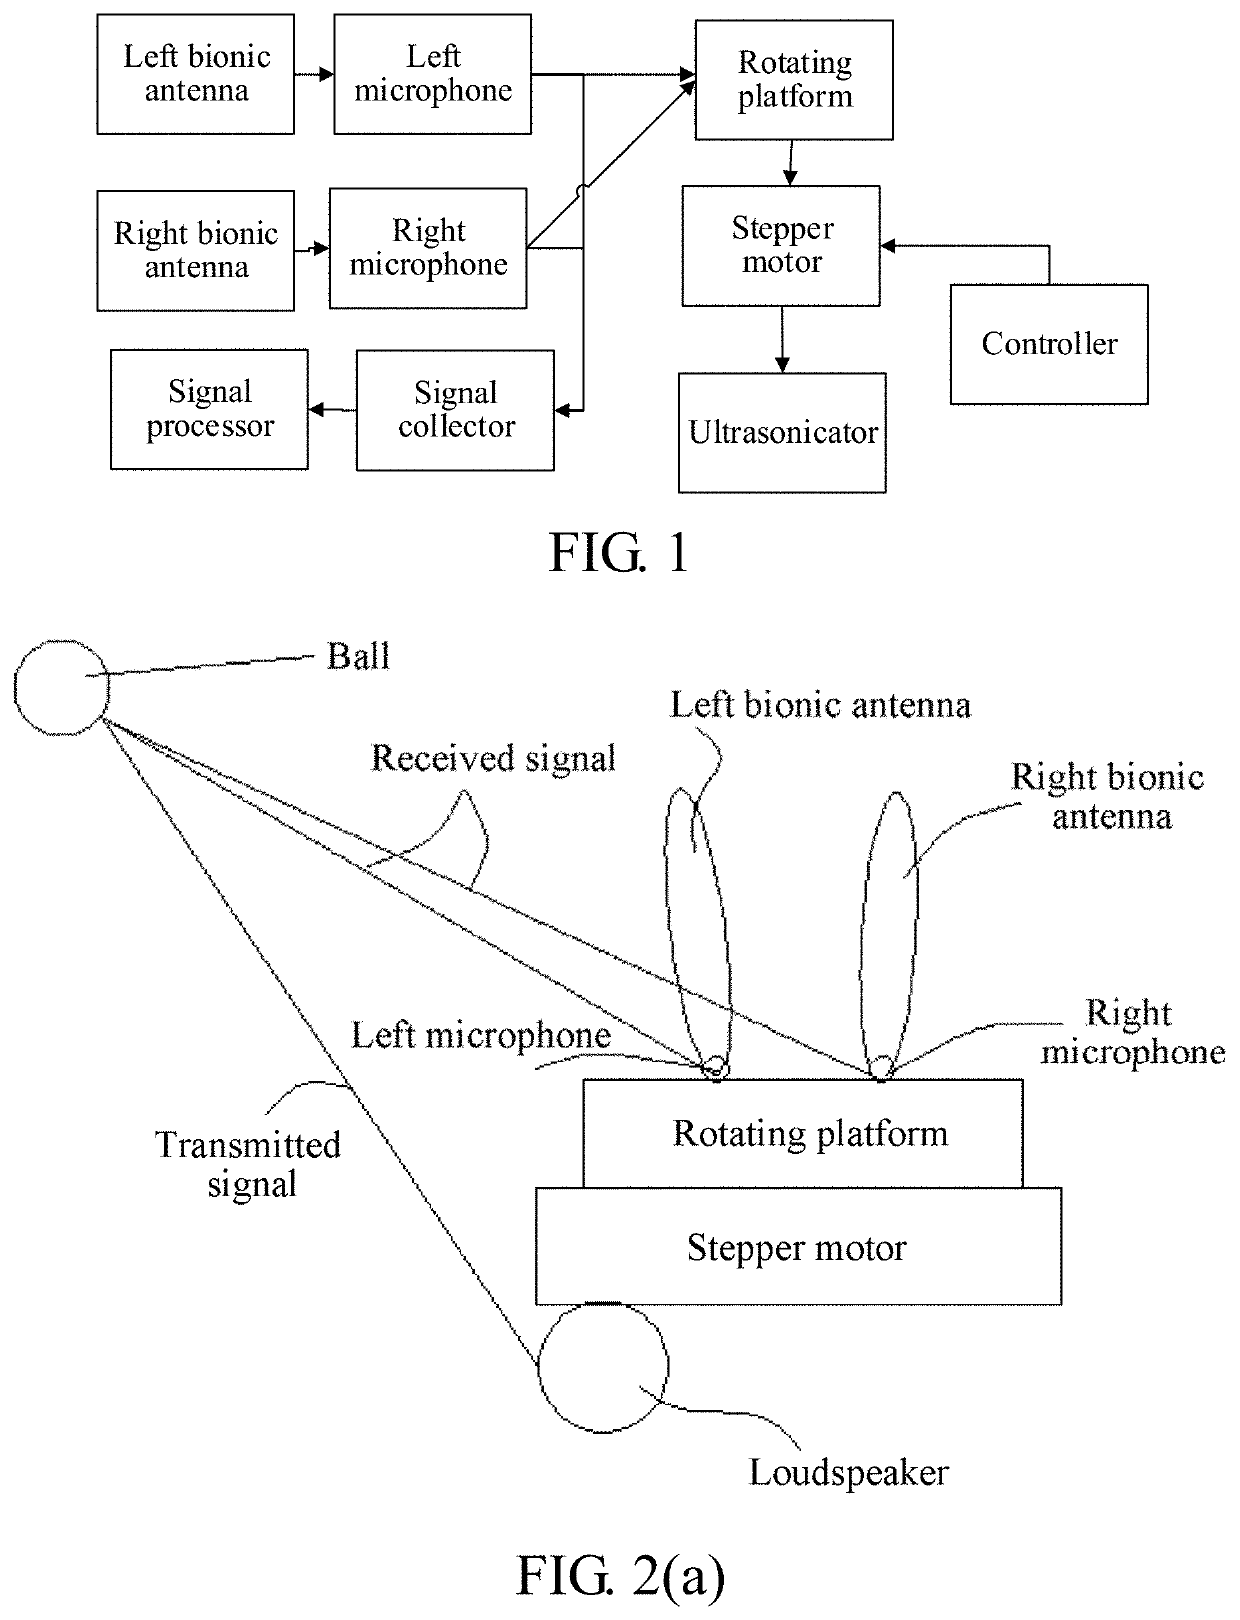 Target positioning device and method based on plecotus auritus double-pinna bionic sonar